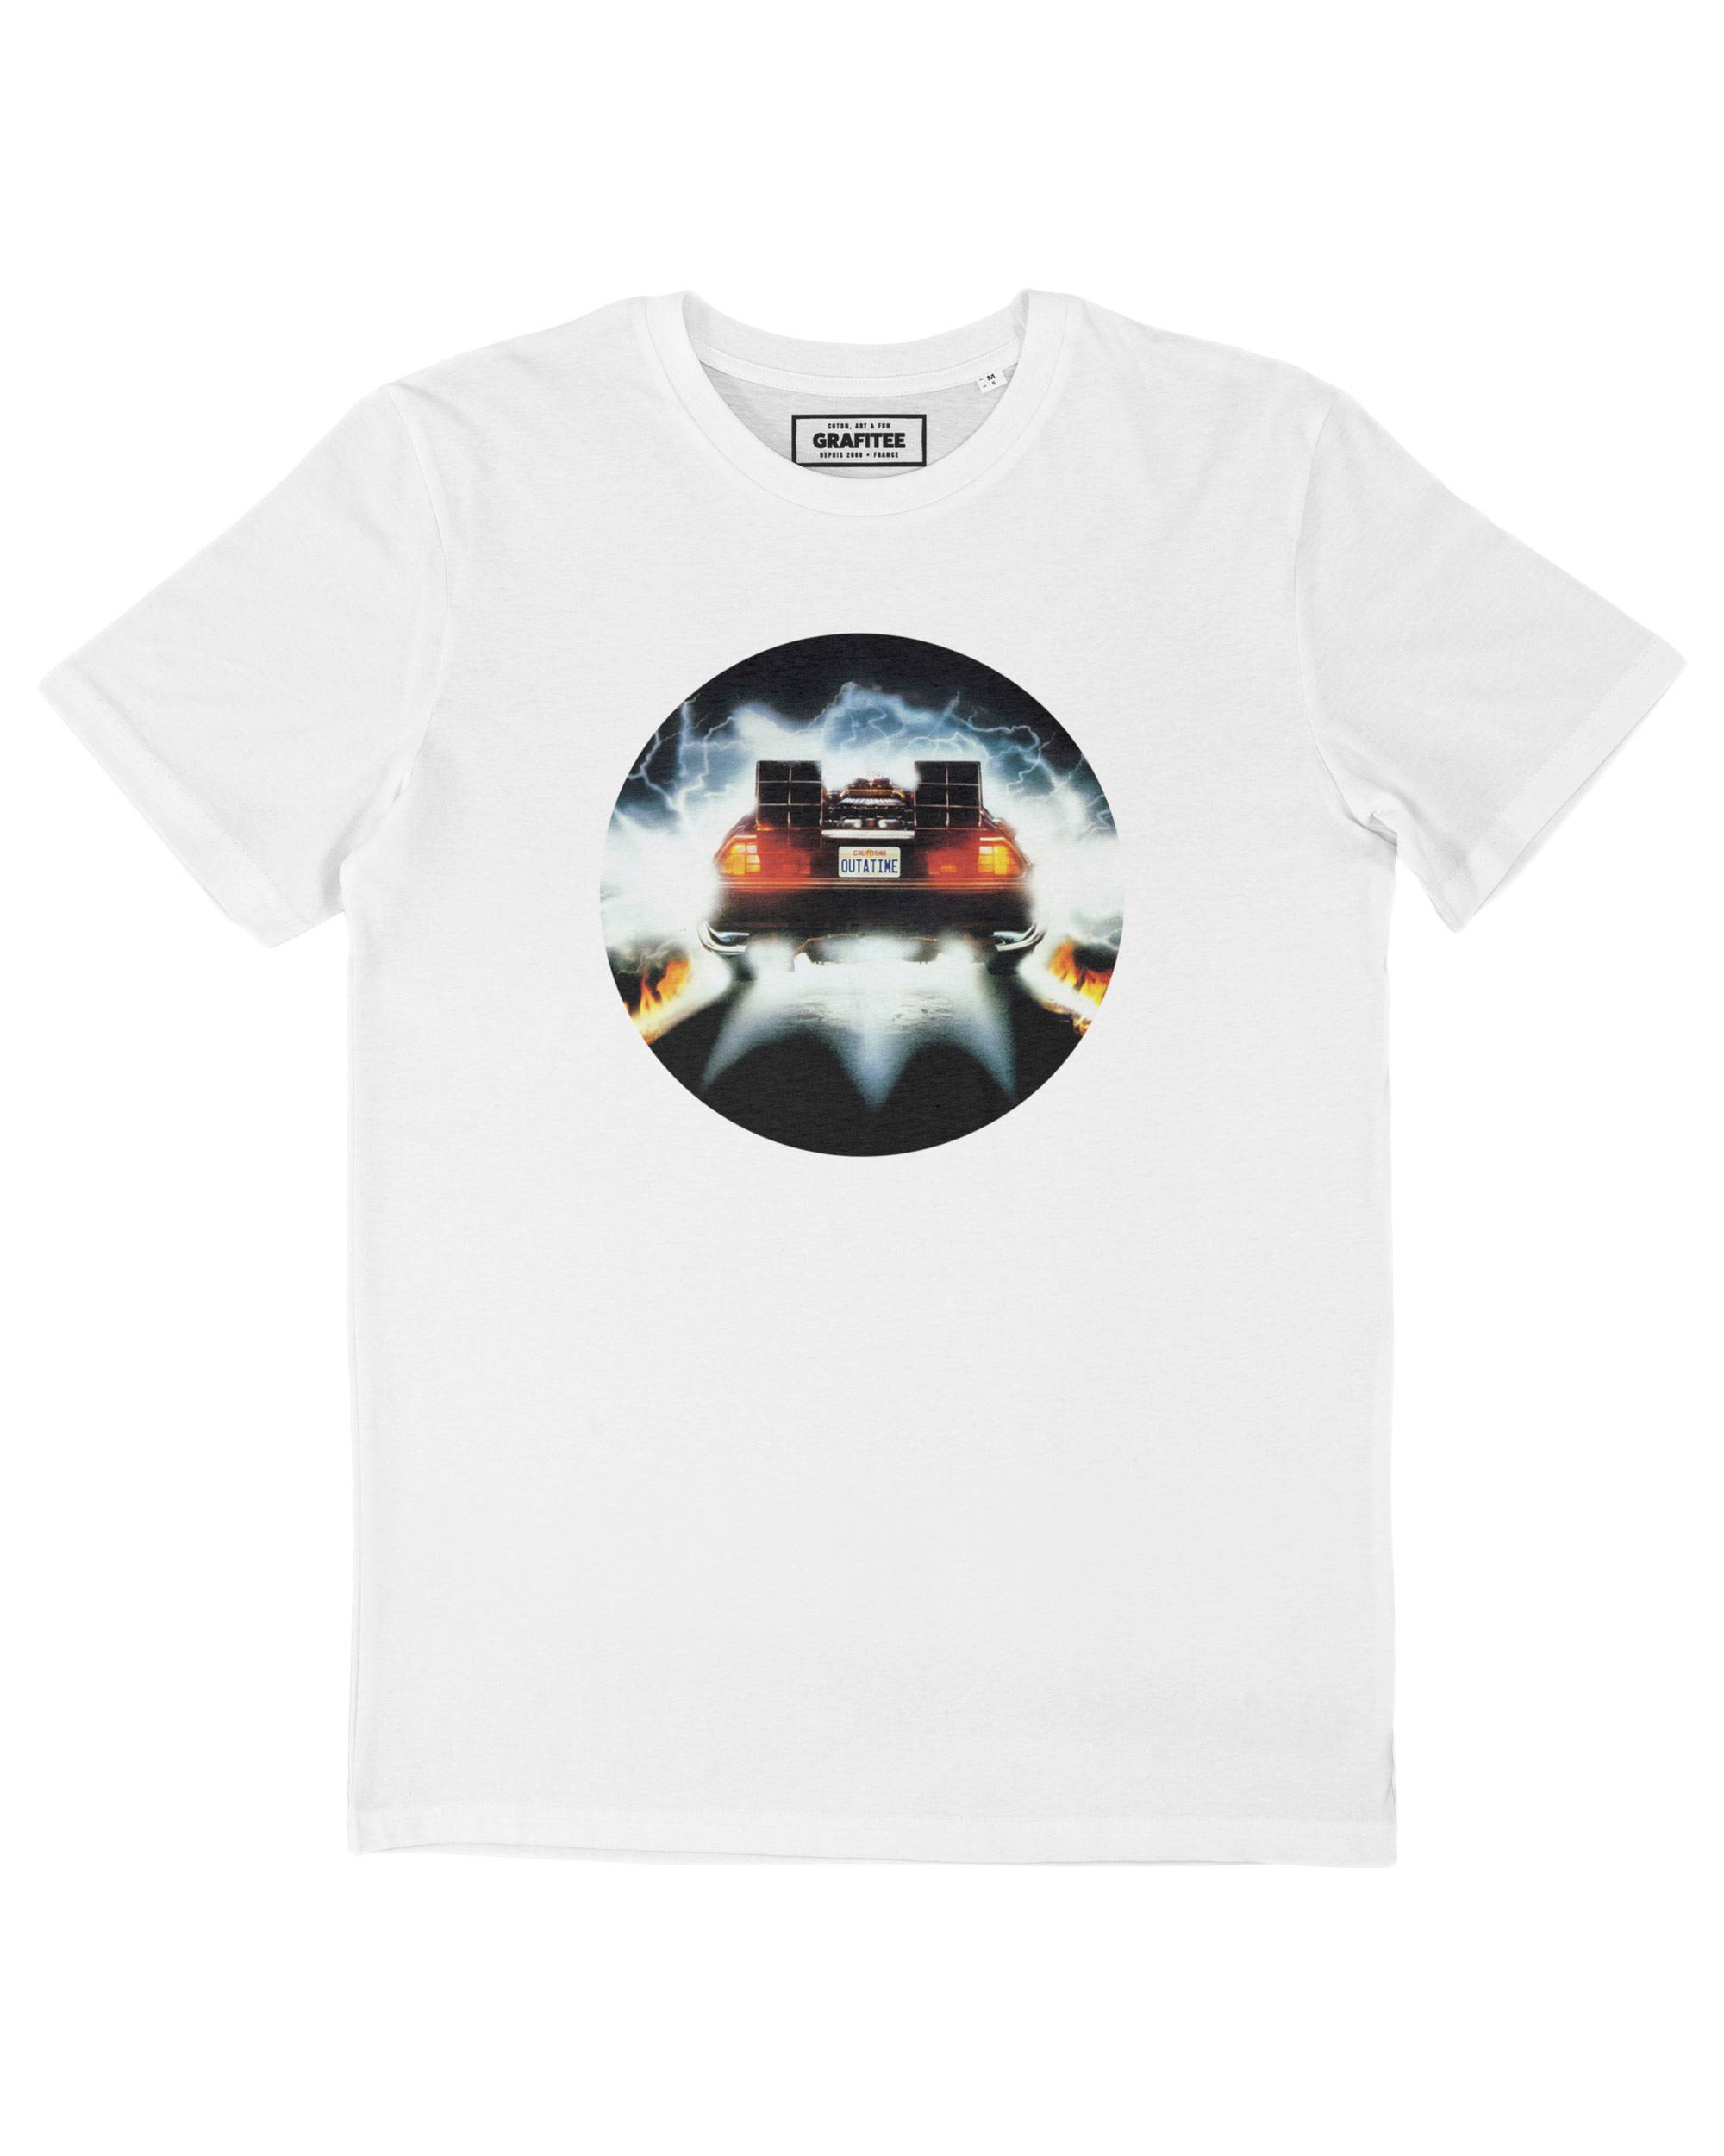 T-shirt DeLorean On Fire Grafitee